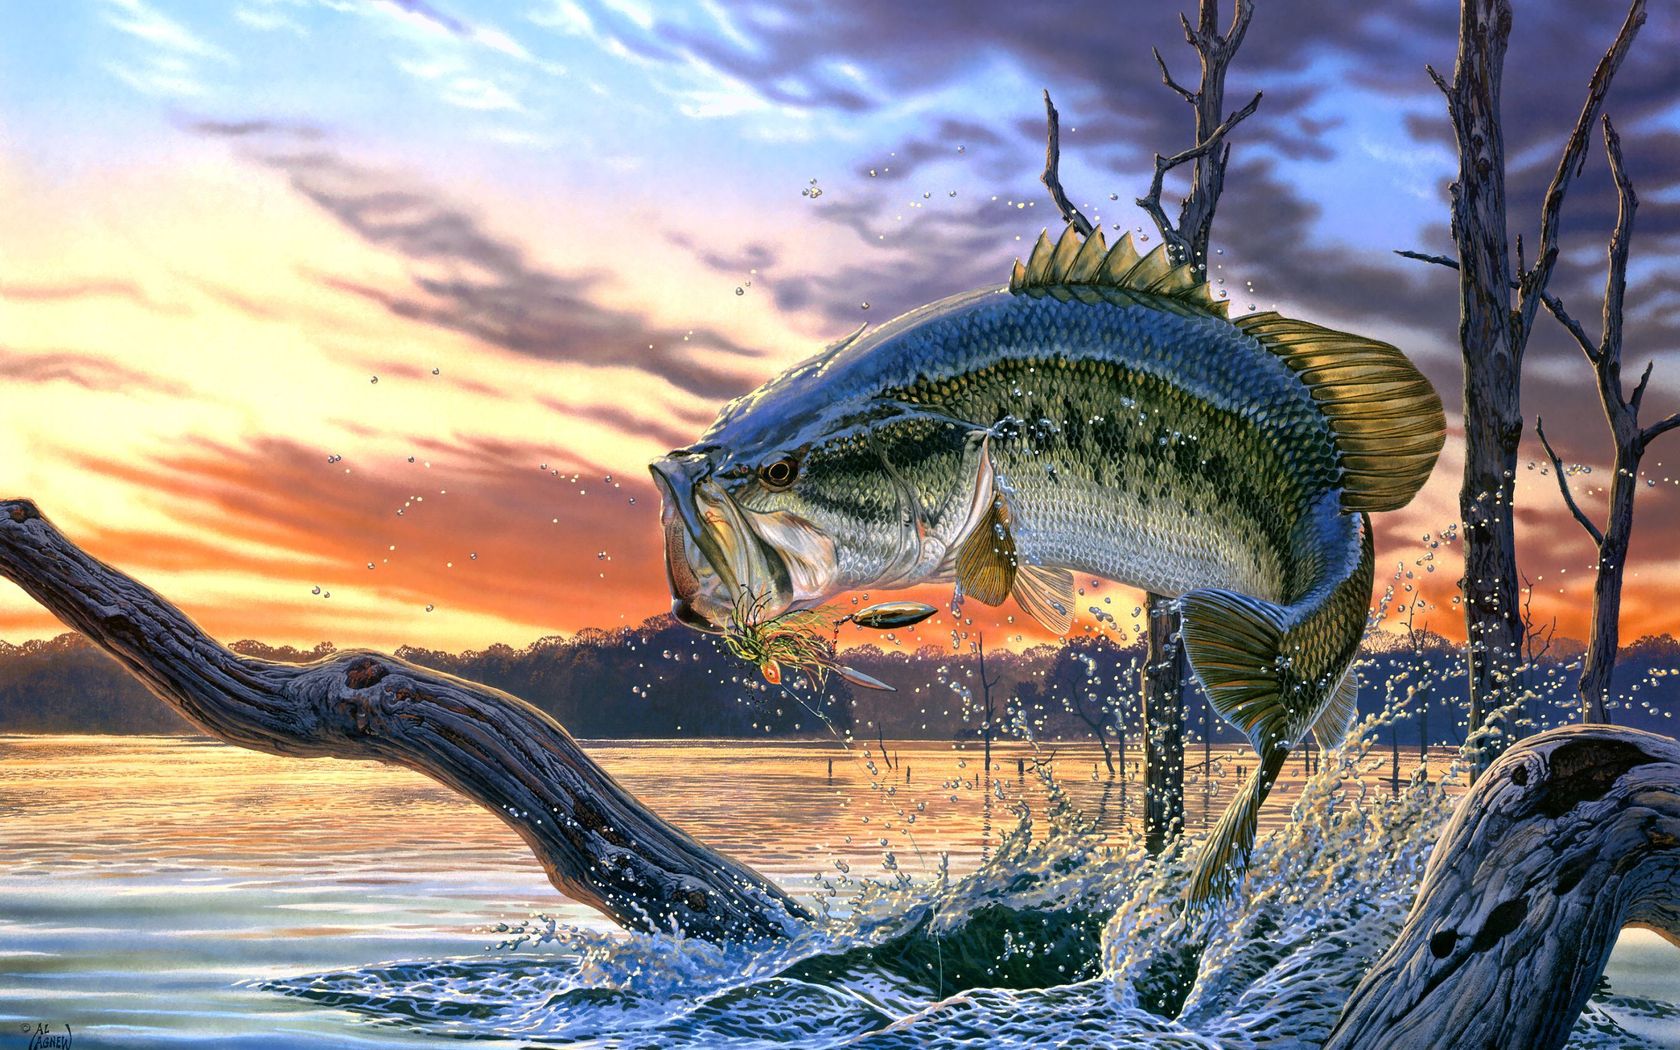  orglargemouth bass fishing wallpaper background screensaver